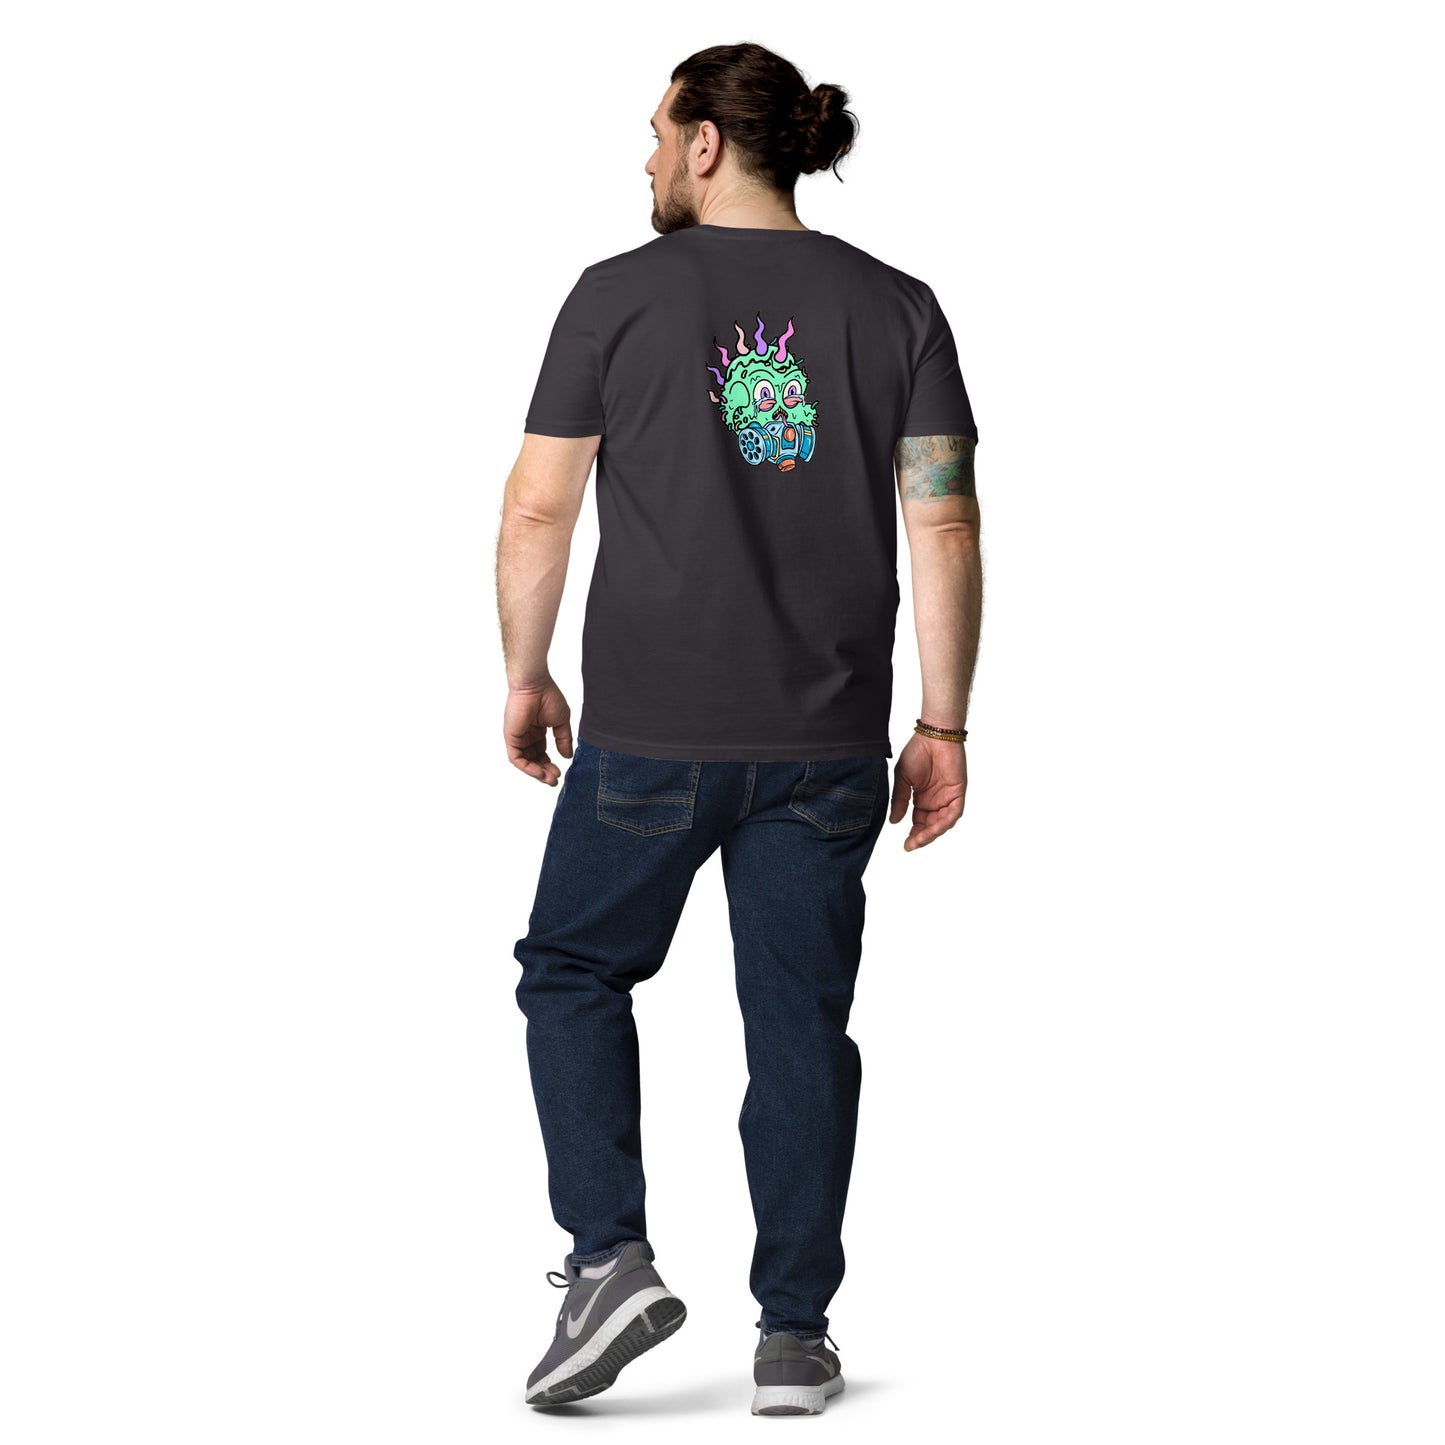 Unisex organic cotton t-shirt REAR PRINT + FRONT LOGO feat Toxic Skulls Club #7803